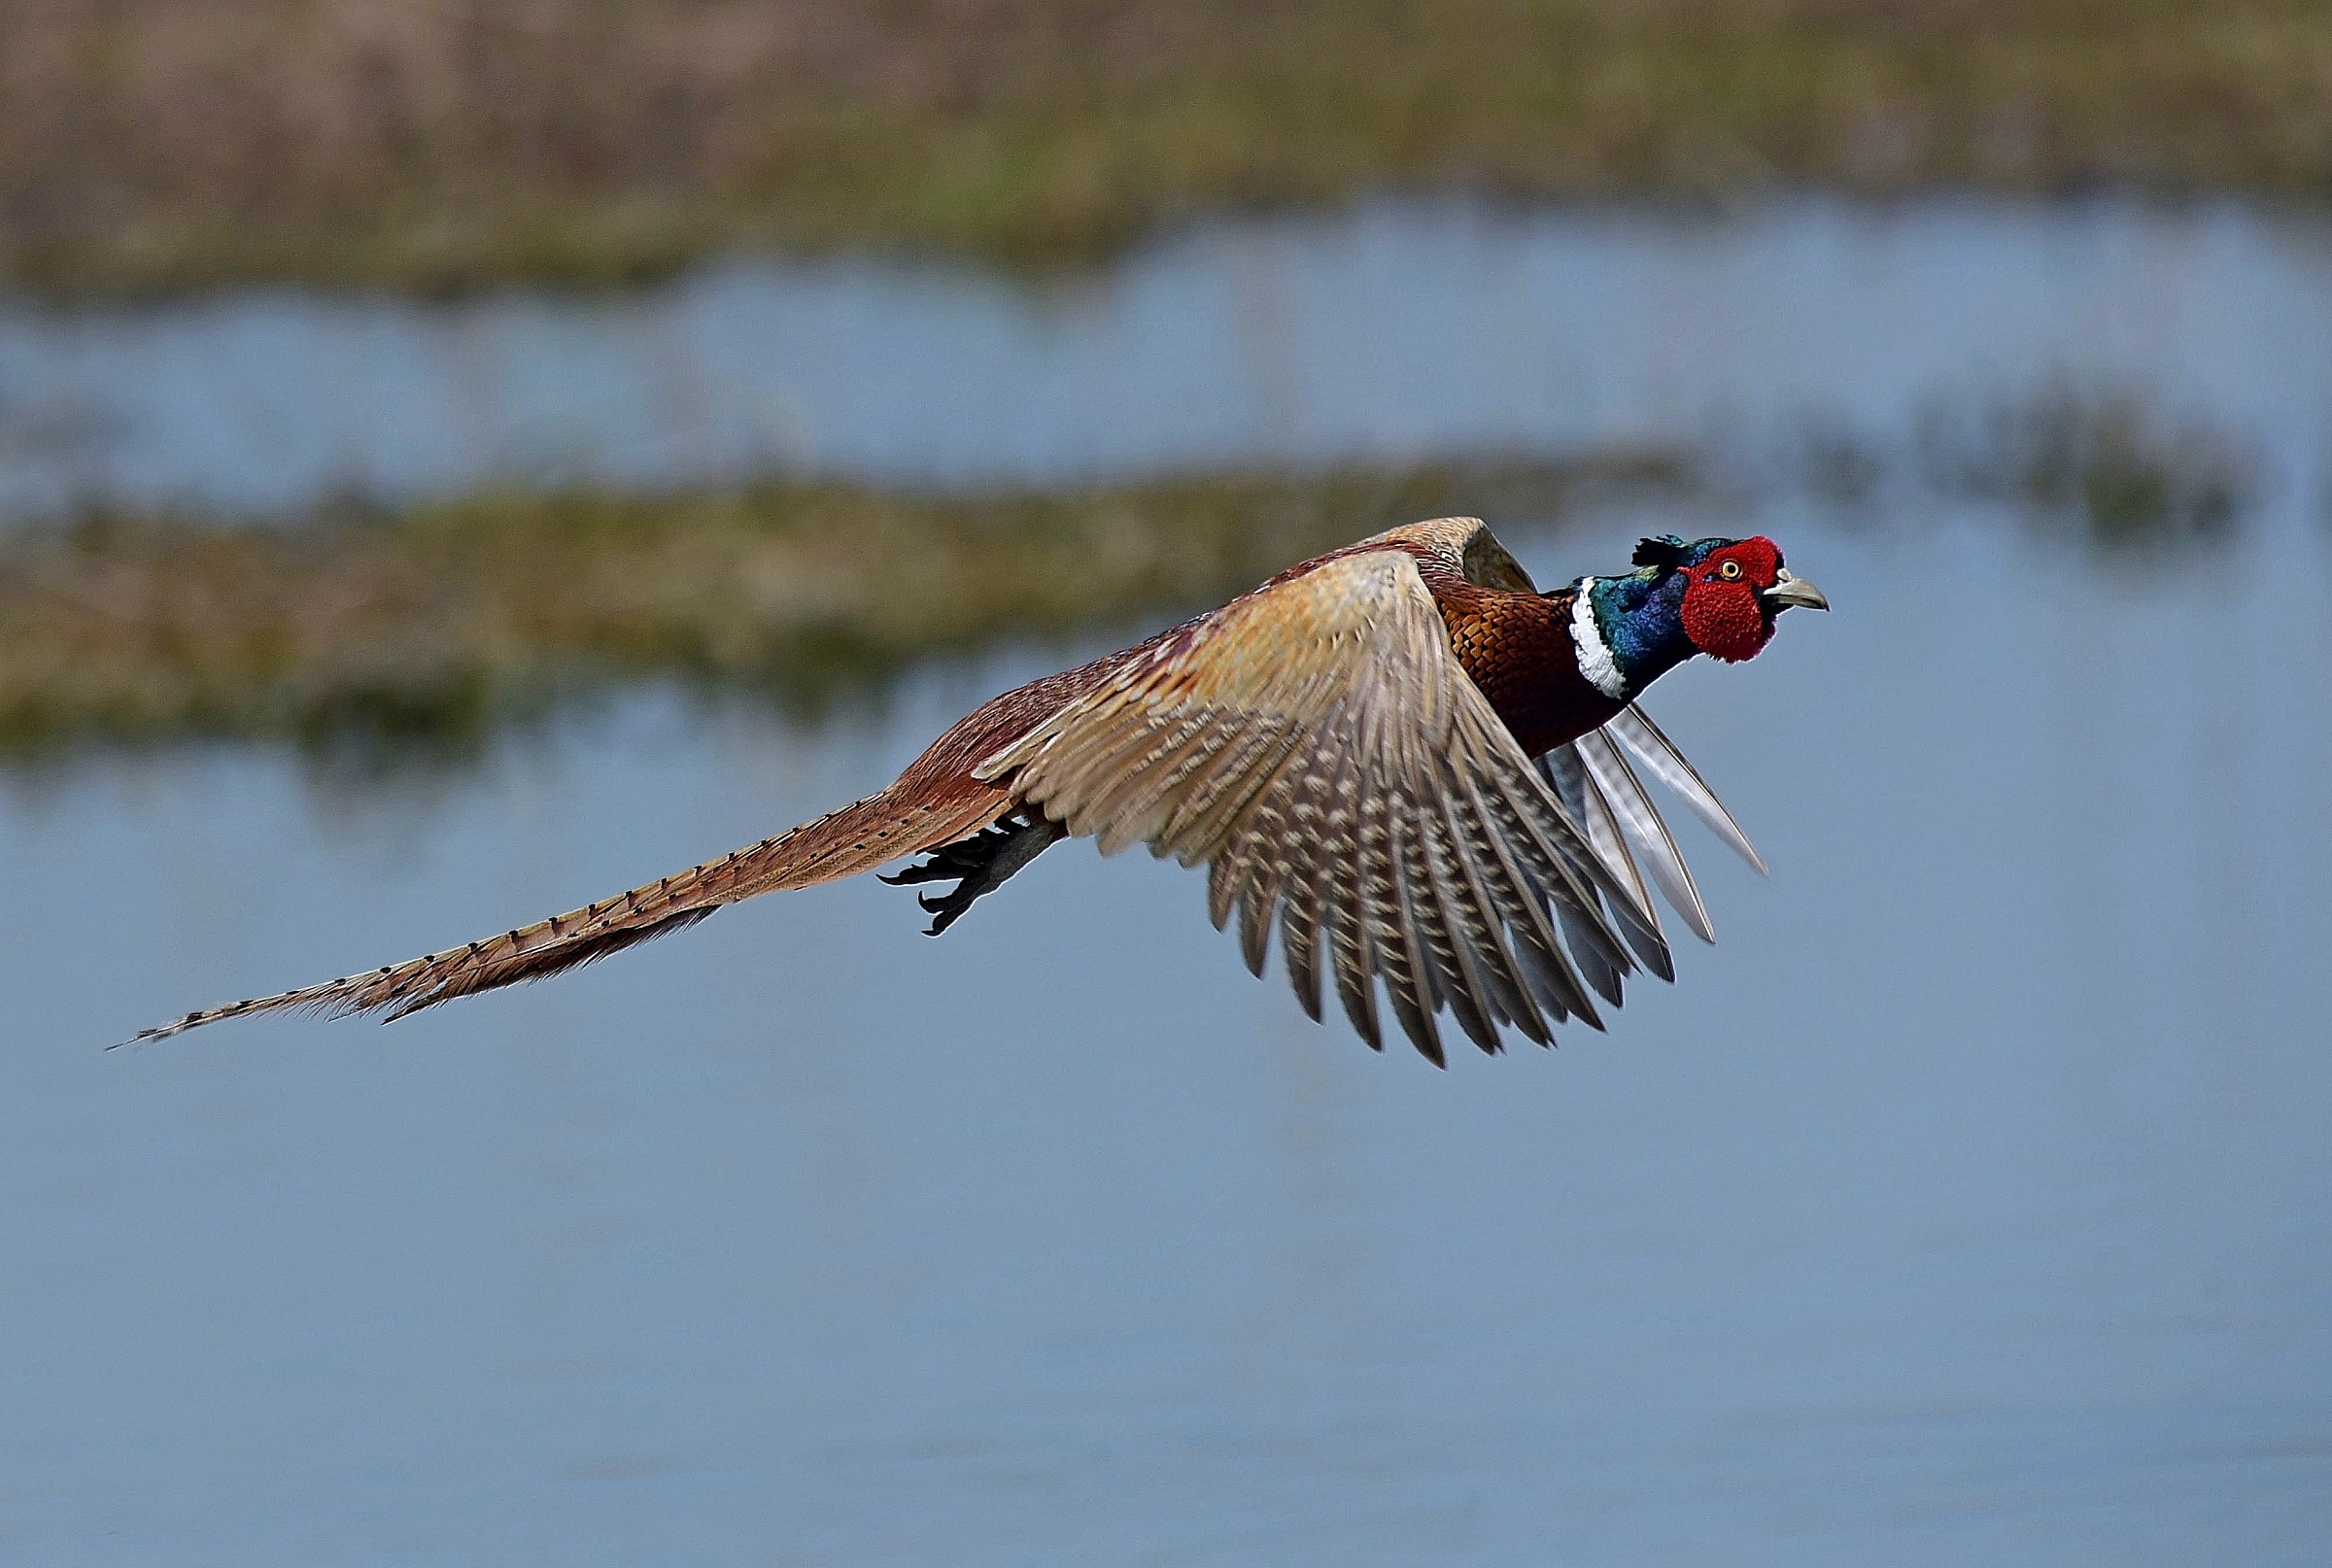 Finally pheasant in flight!...